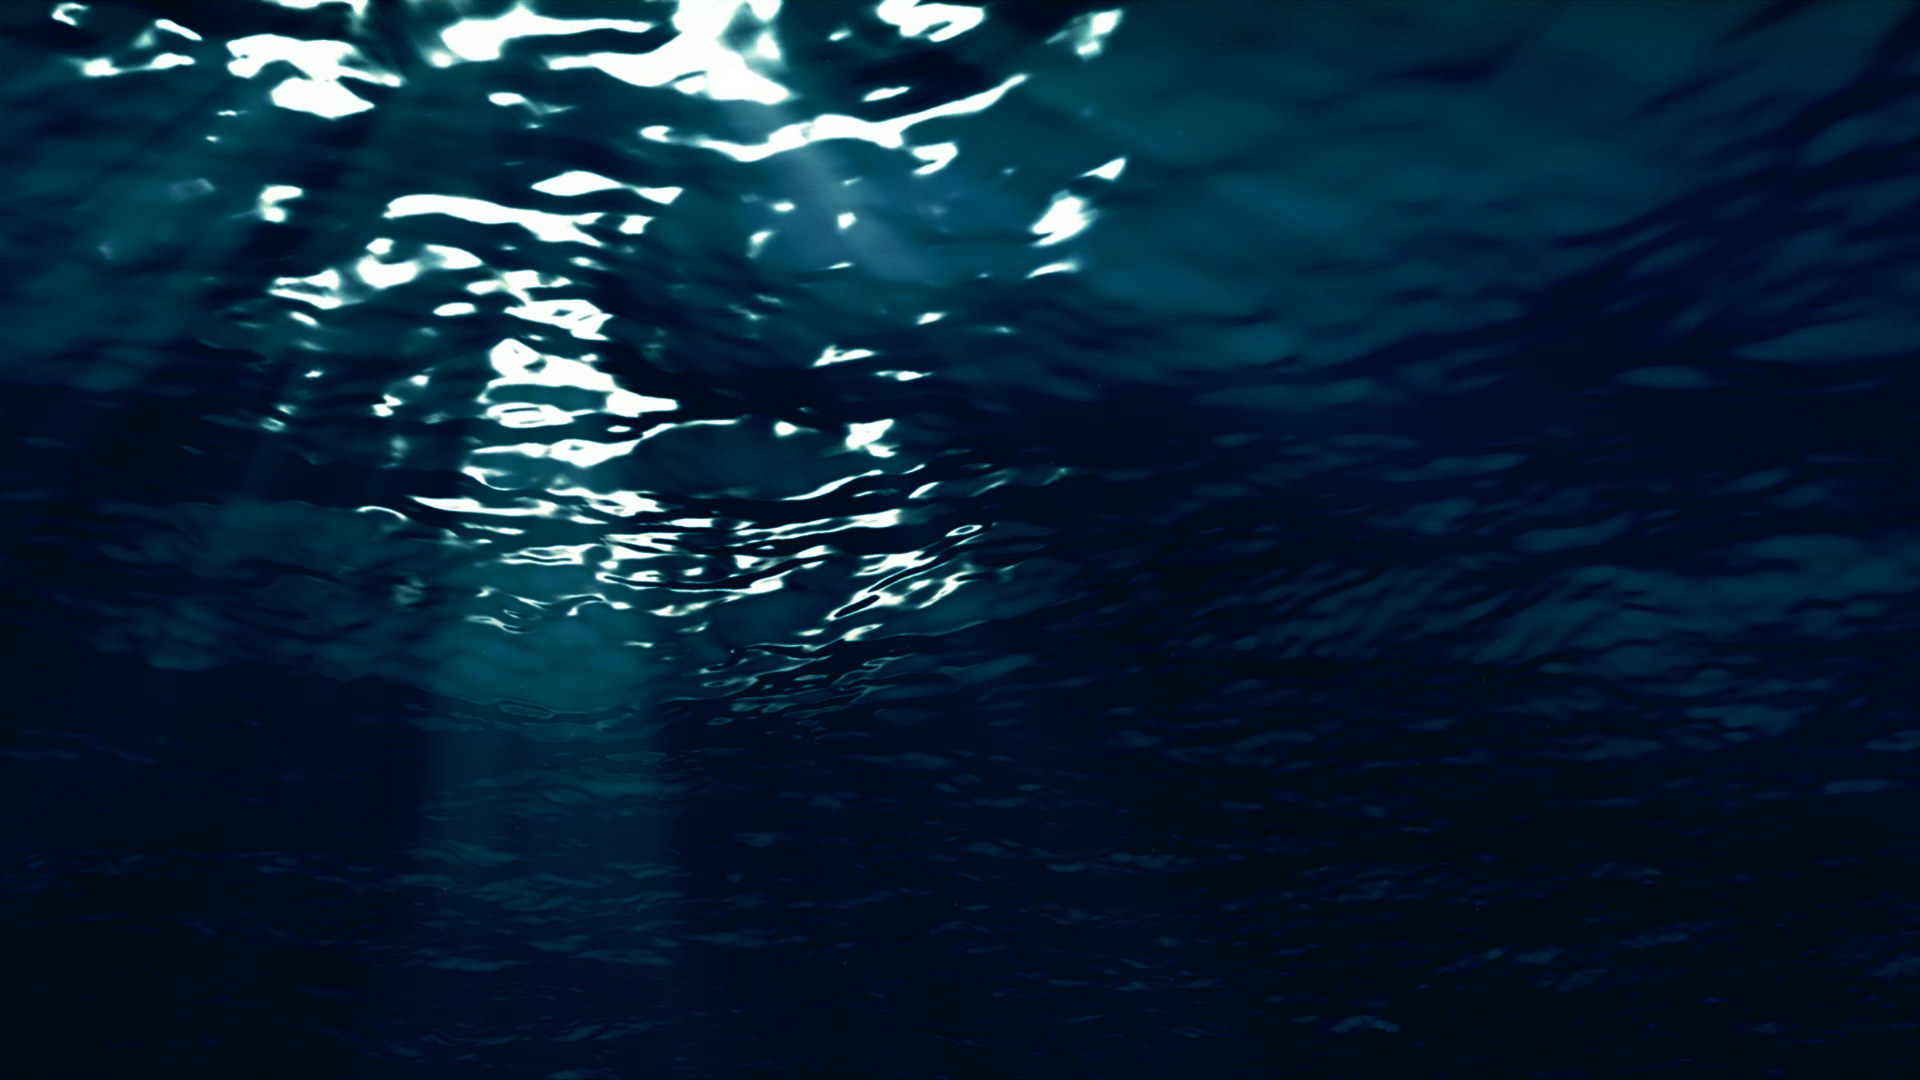 [48+] Animated Underwater Wallpaper - WallpaperSafari